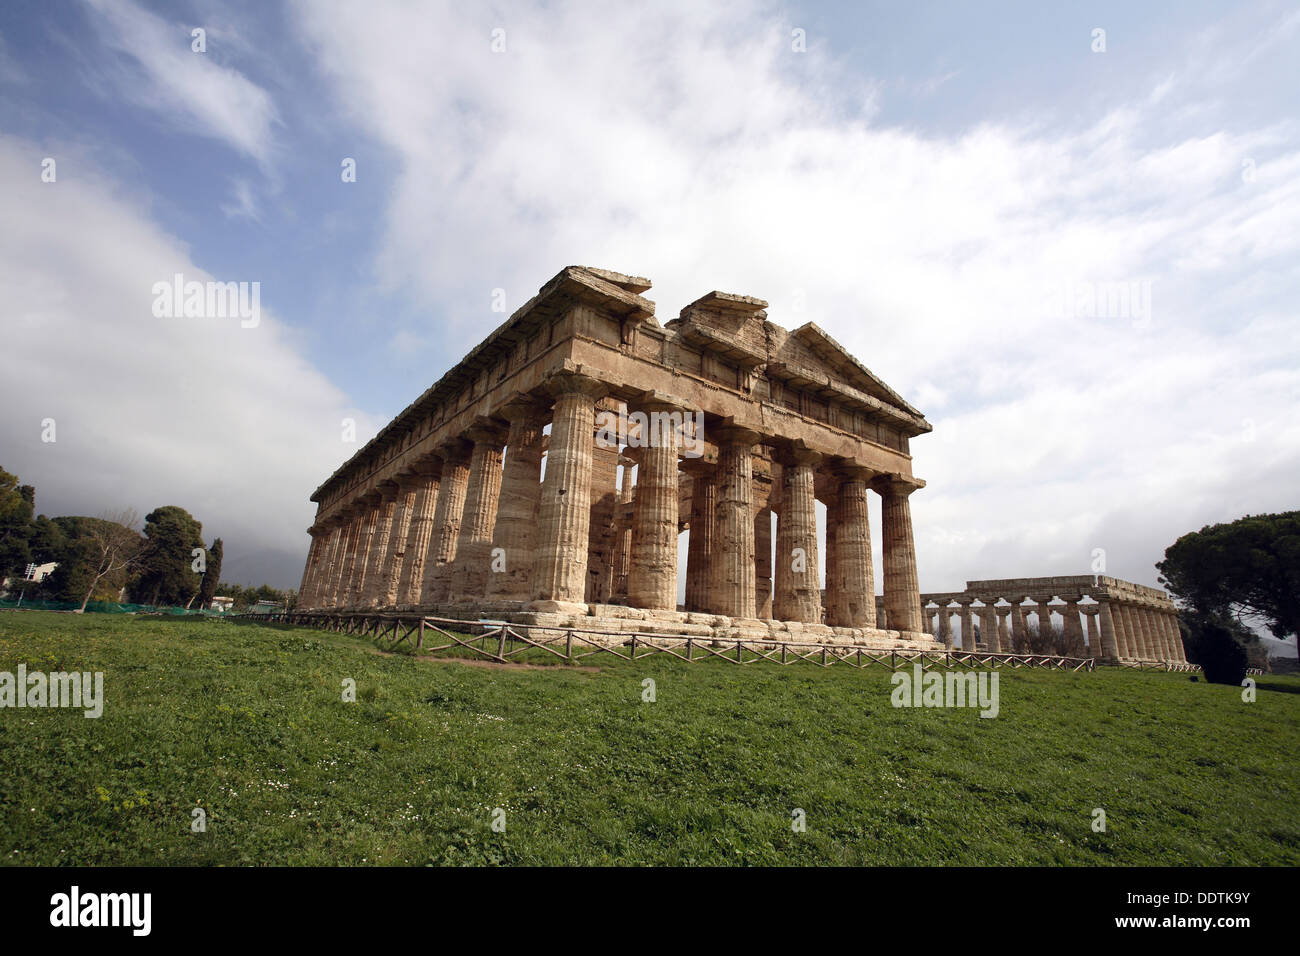 The Temple of Neptune, Peastum, Italy. Artist: Samuel Magal Stock Photo